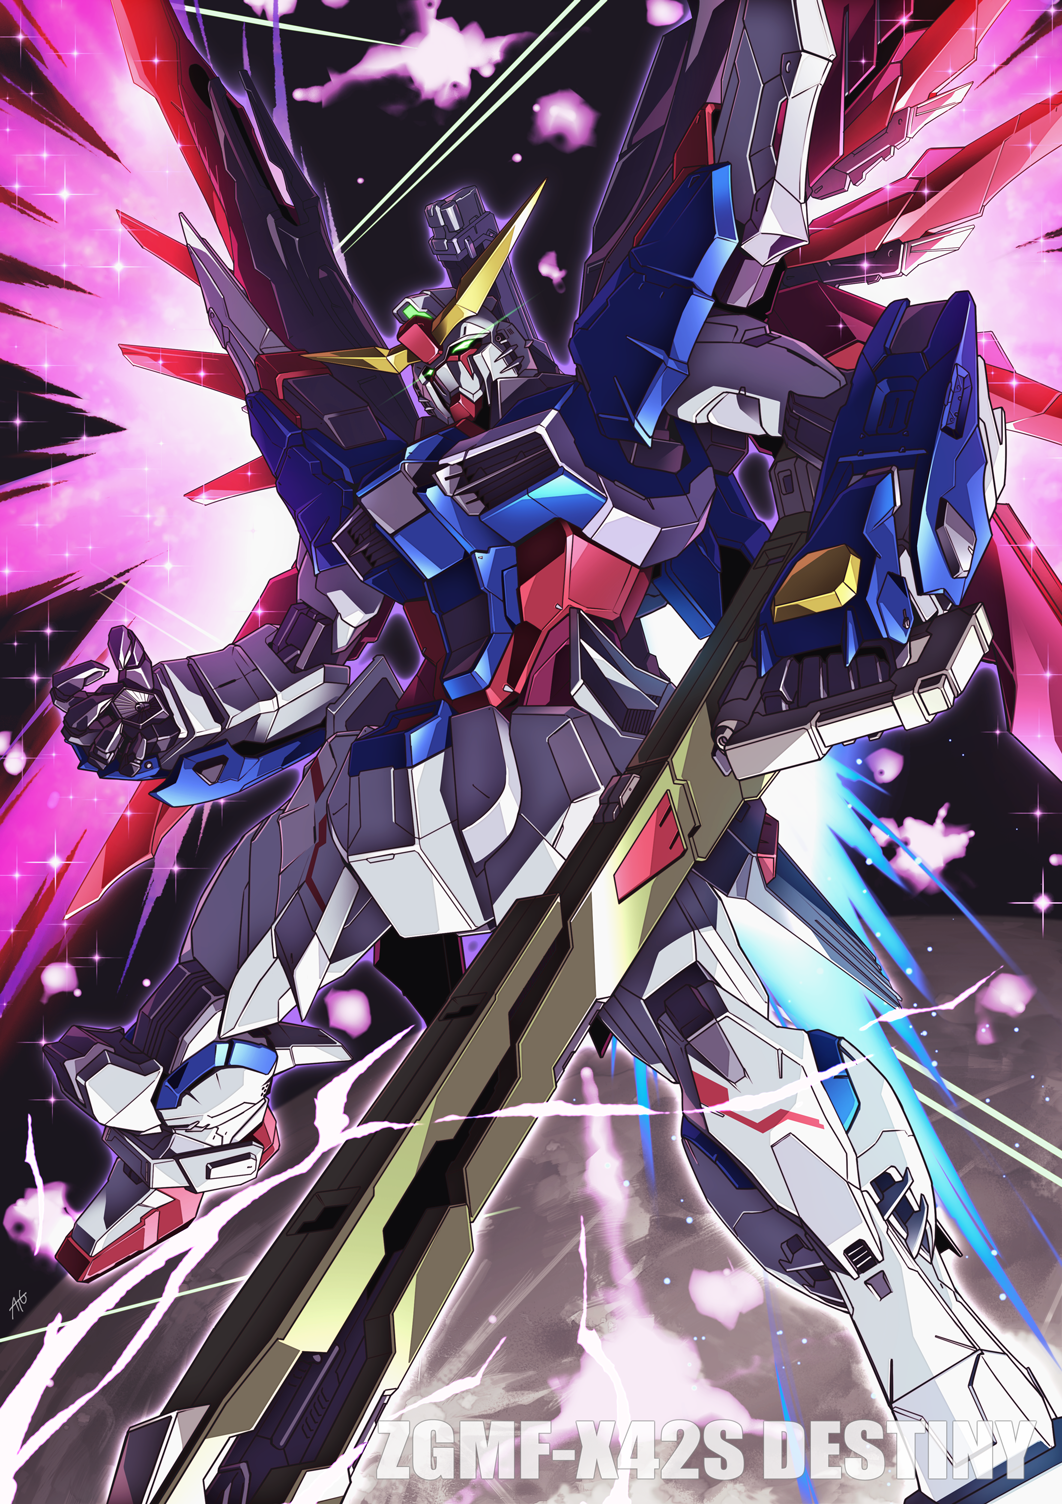 Anime 1062x1504 anime Gundam Mobile Suit Gundam SEED Destiny Super Robot Taisen Destiny Gundam artwork digital art fan art mechs